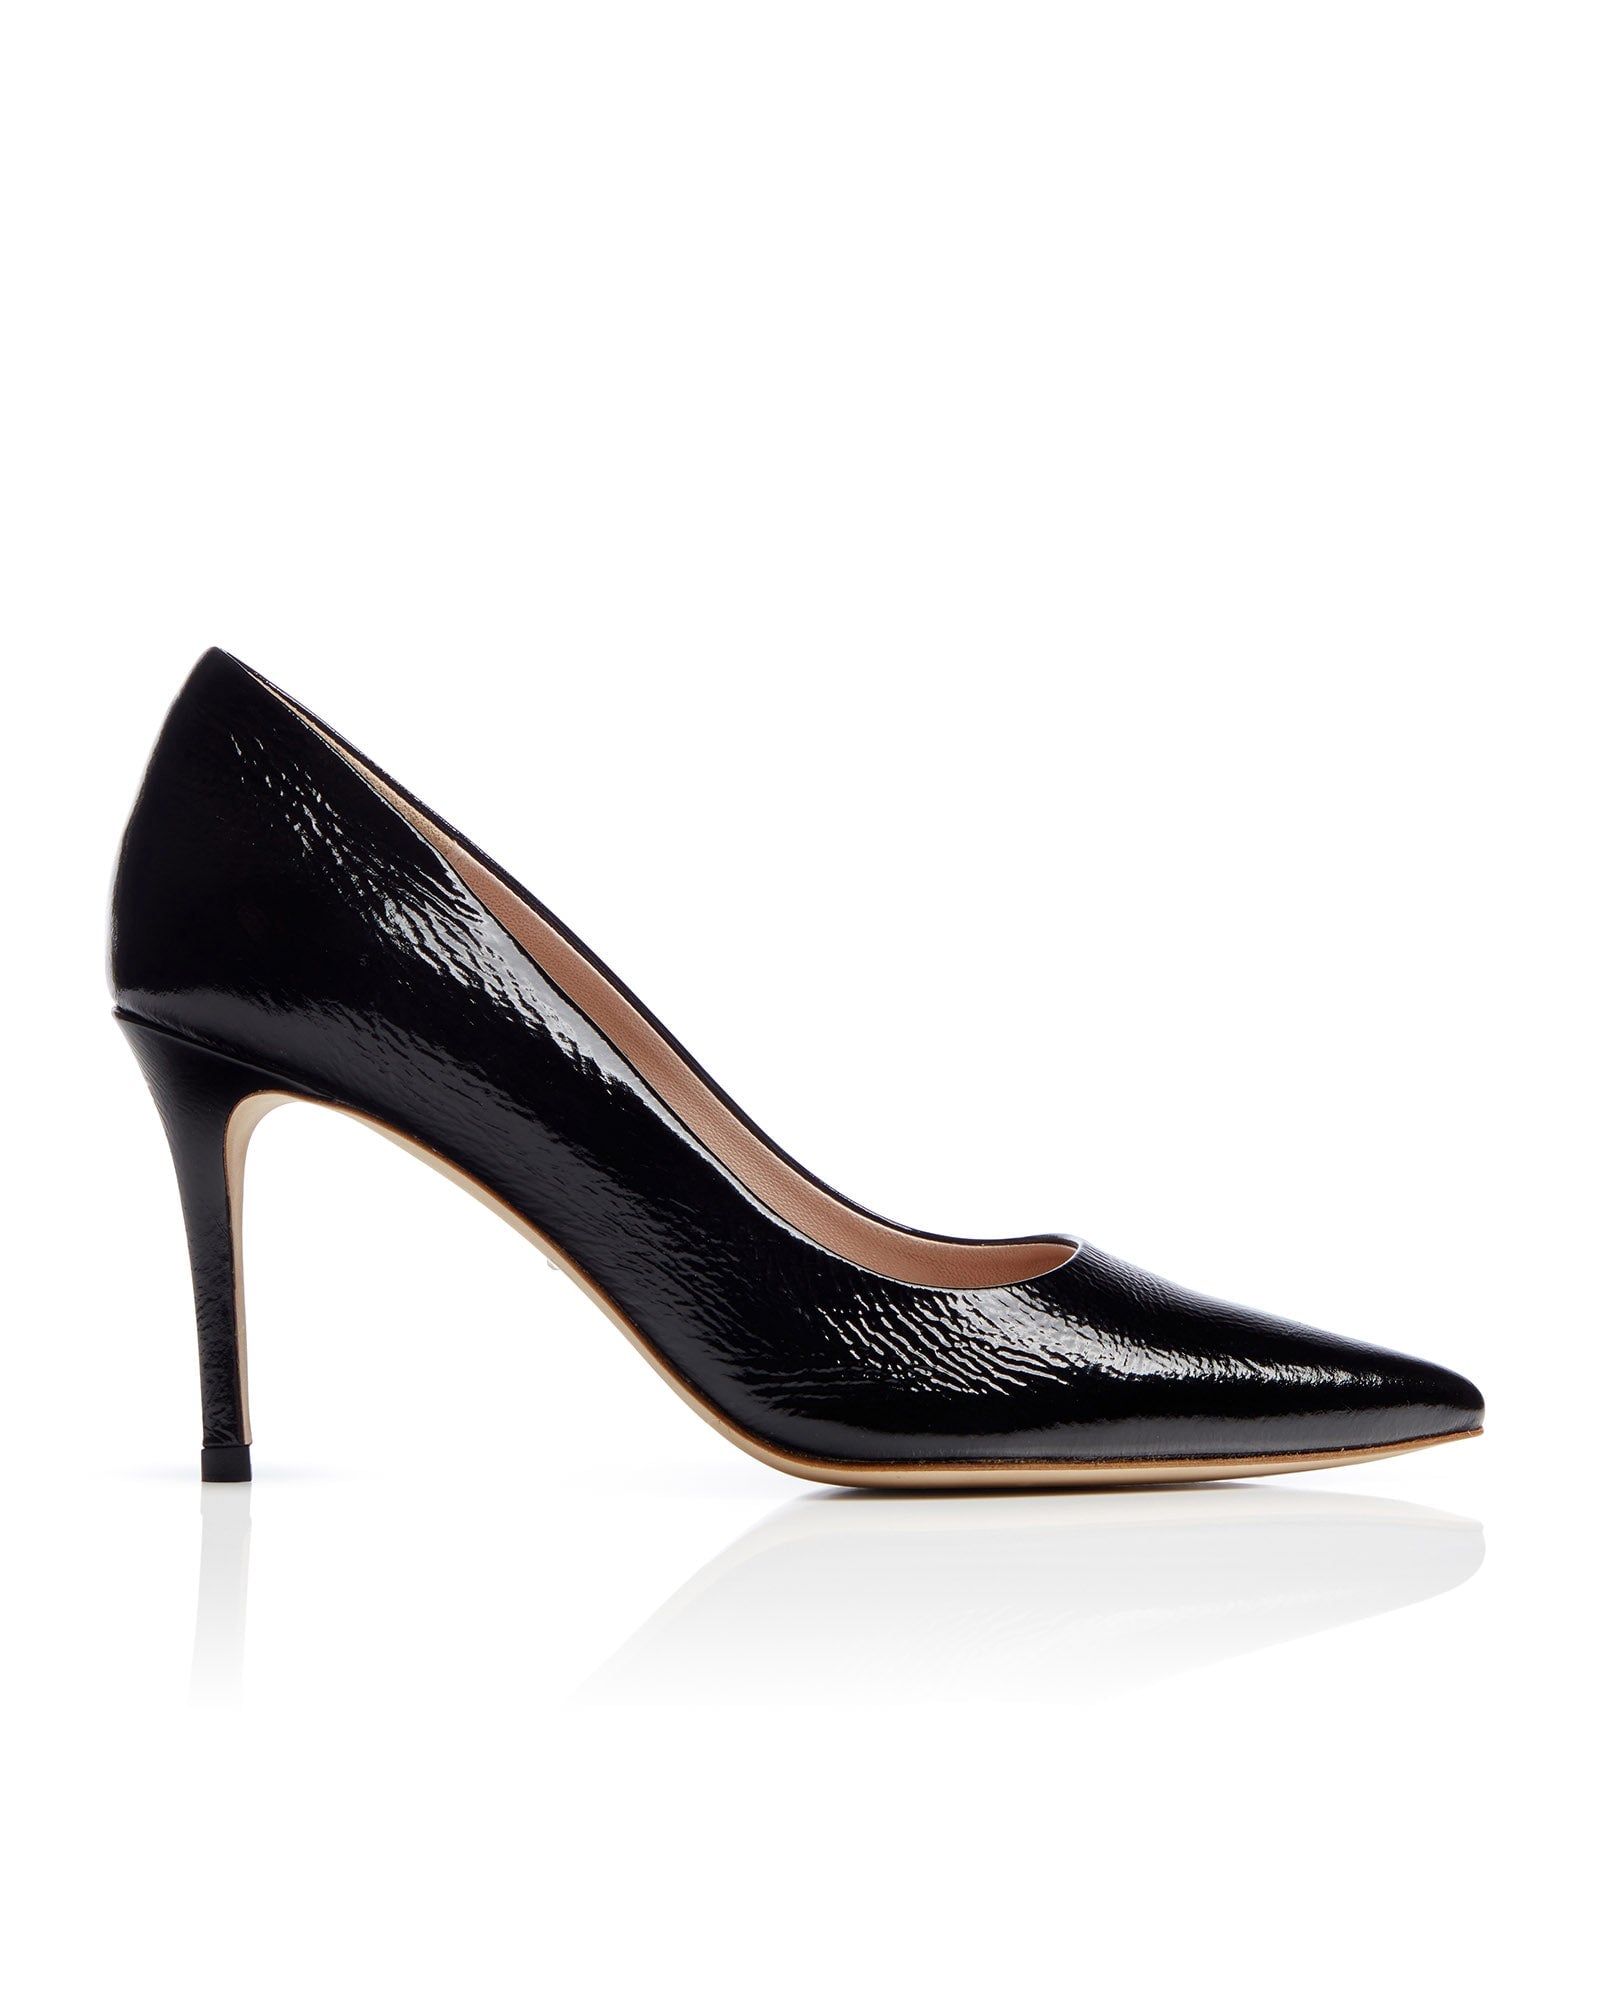 Claudia Patent Black Leather Fashion Shoe Black Leather Pointed Court Shoe  image